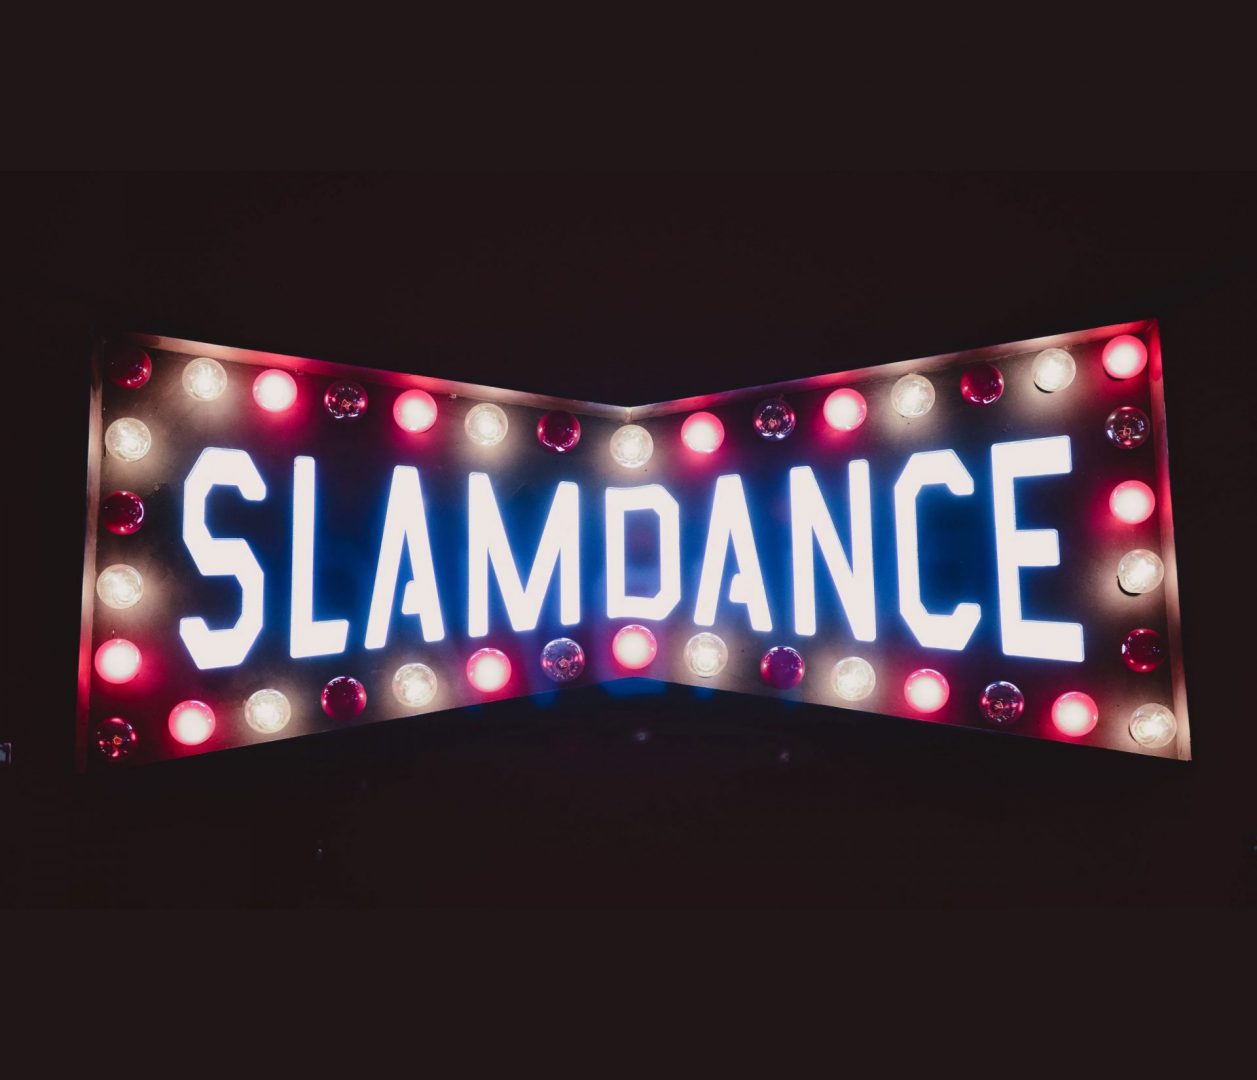 Slamdance Film Festival